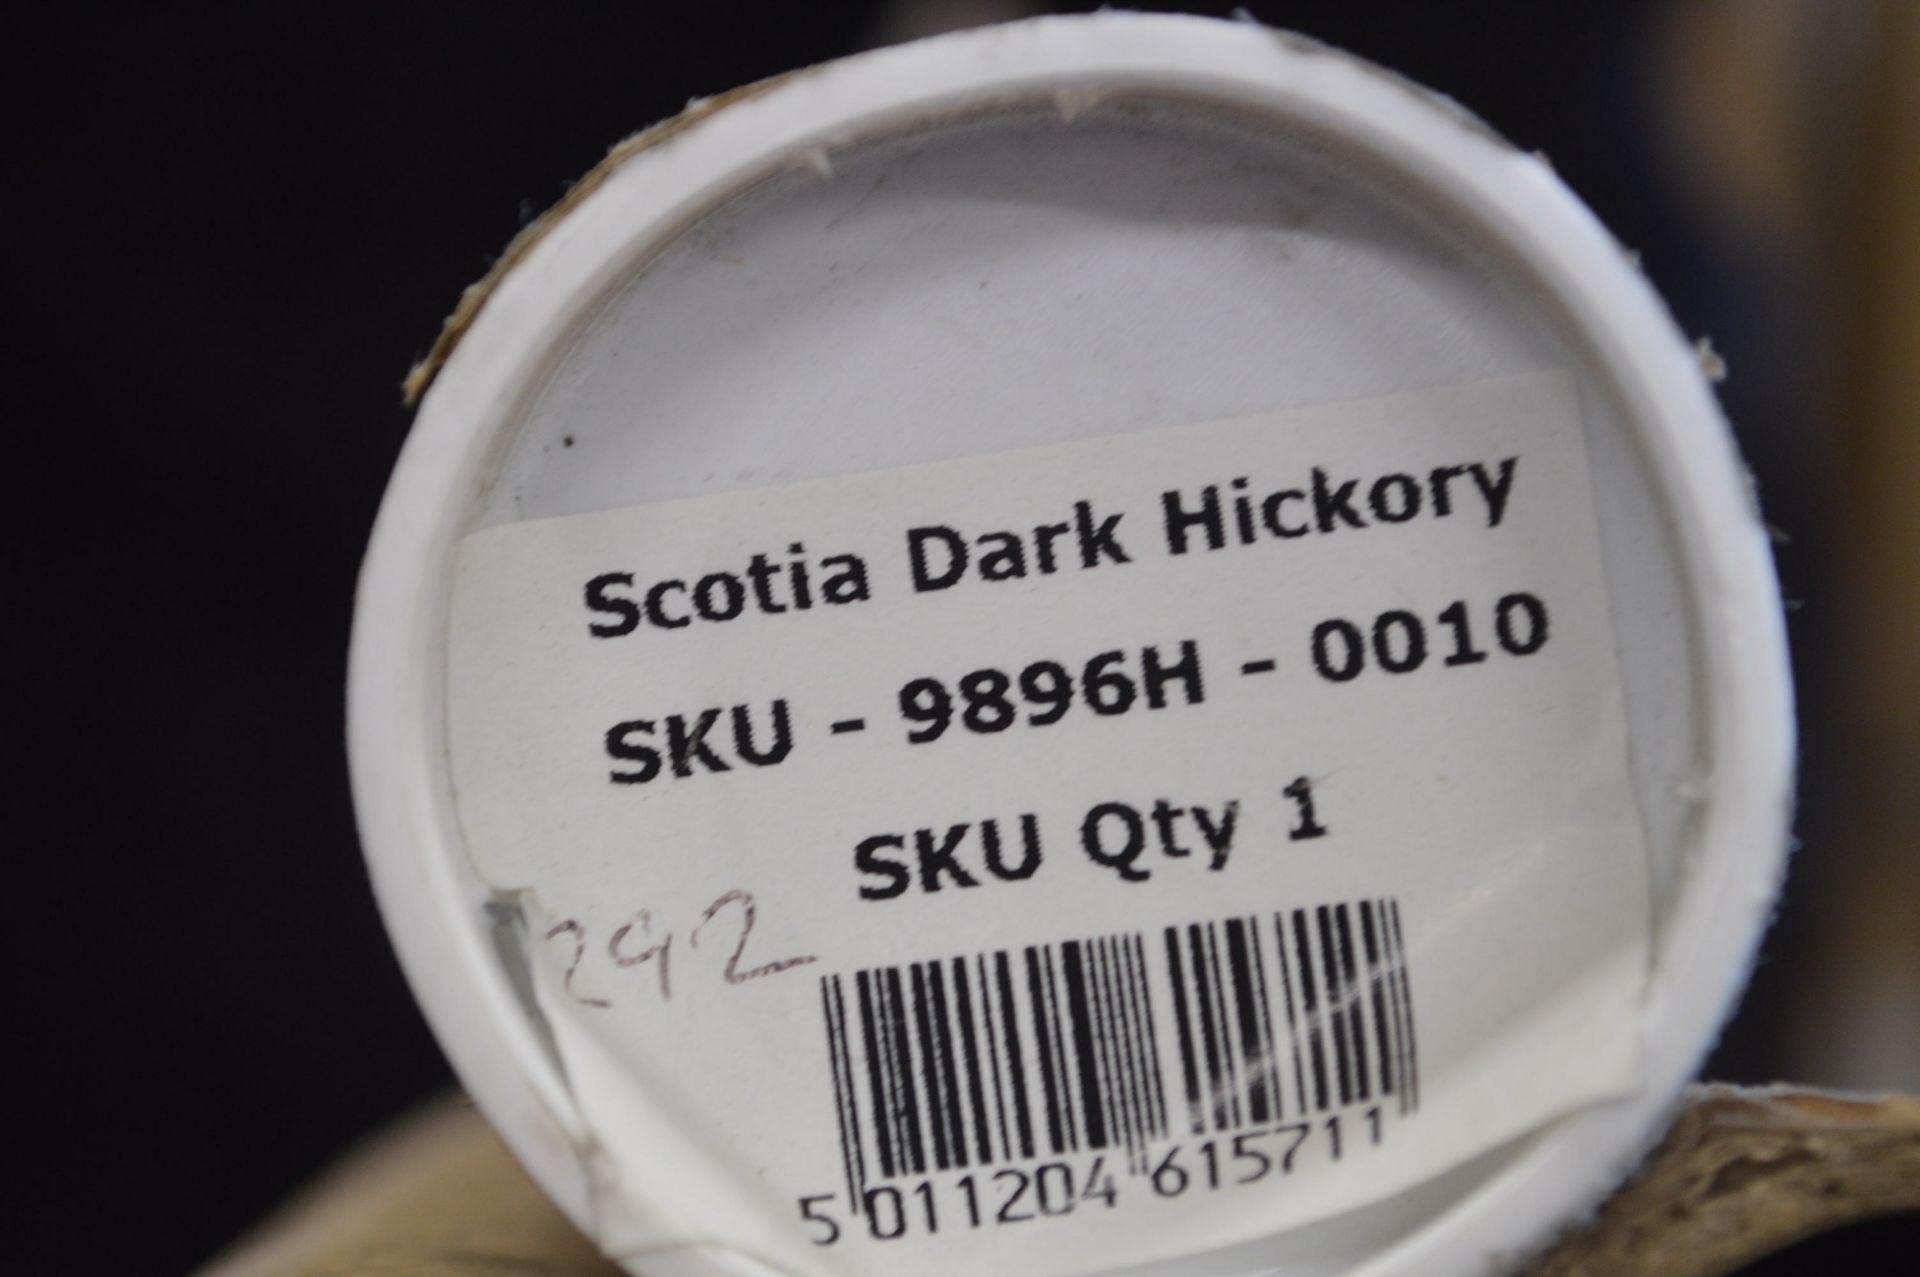 Five Packs of Hickory Scotia